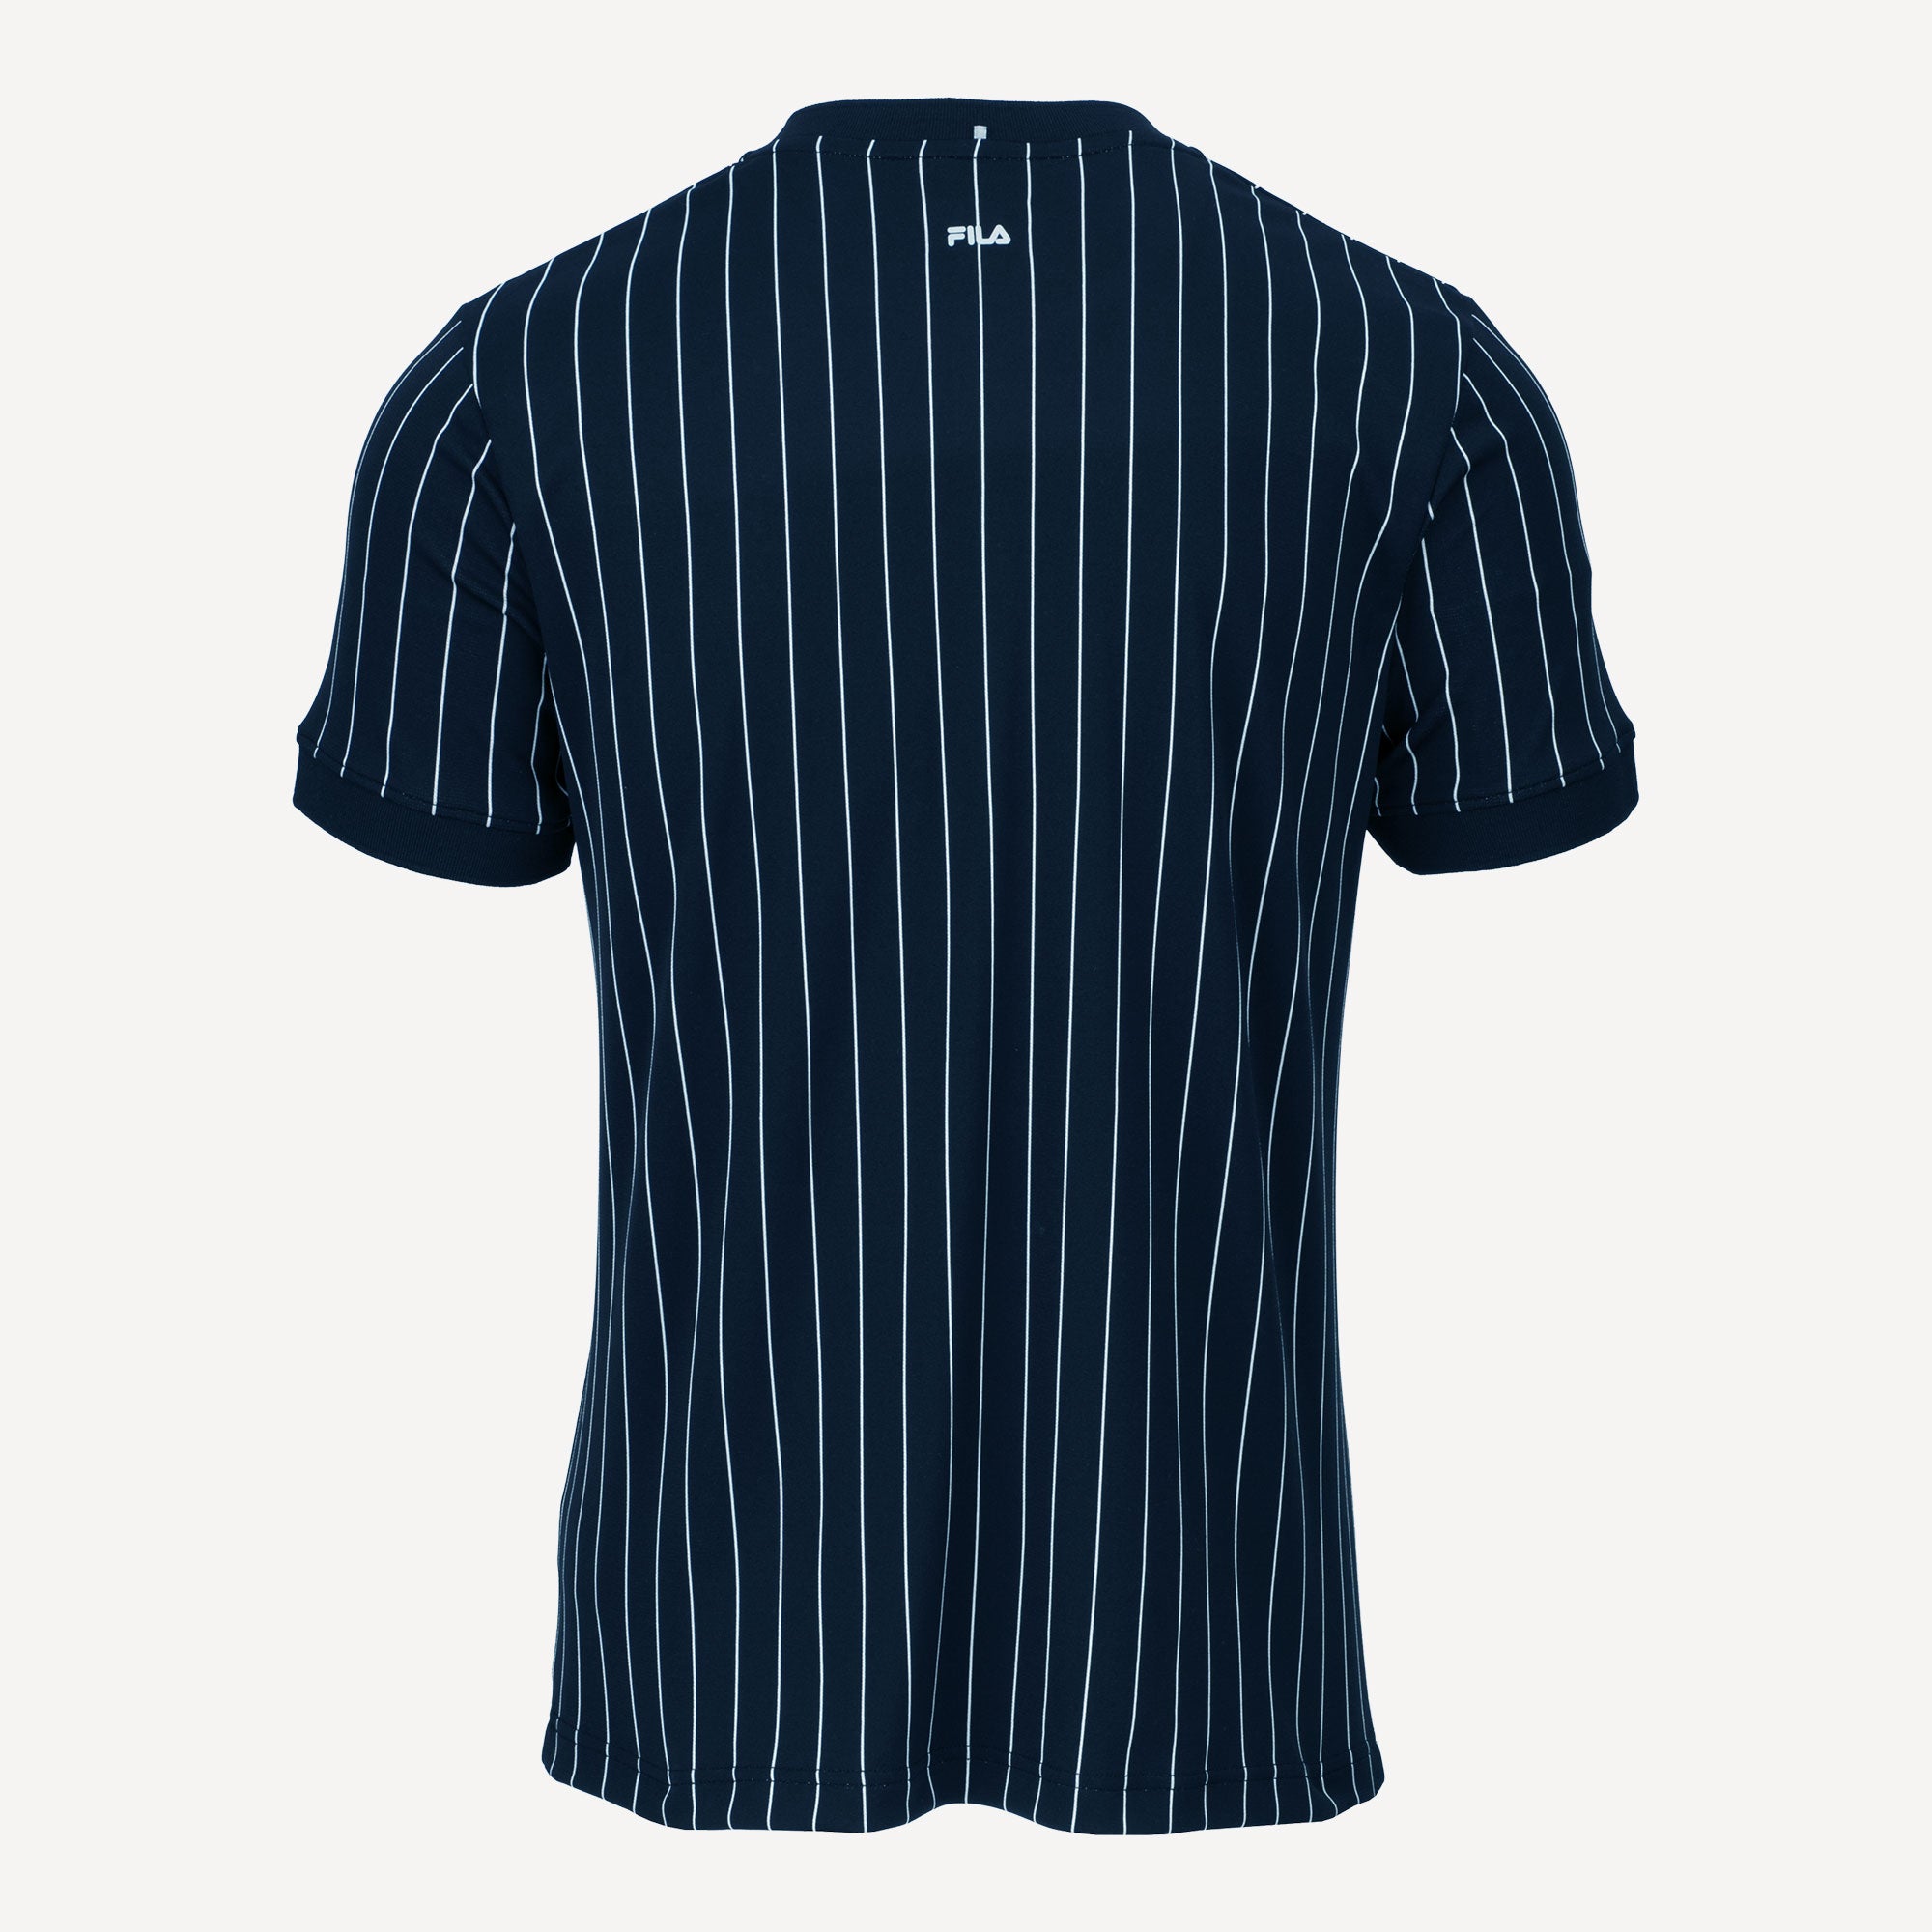 Fila Men's Stripes Button Tennis Shirt Blue (2)